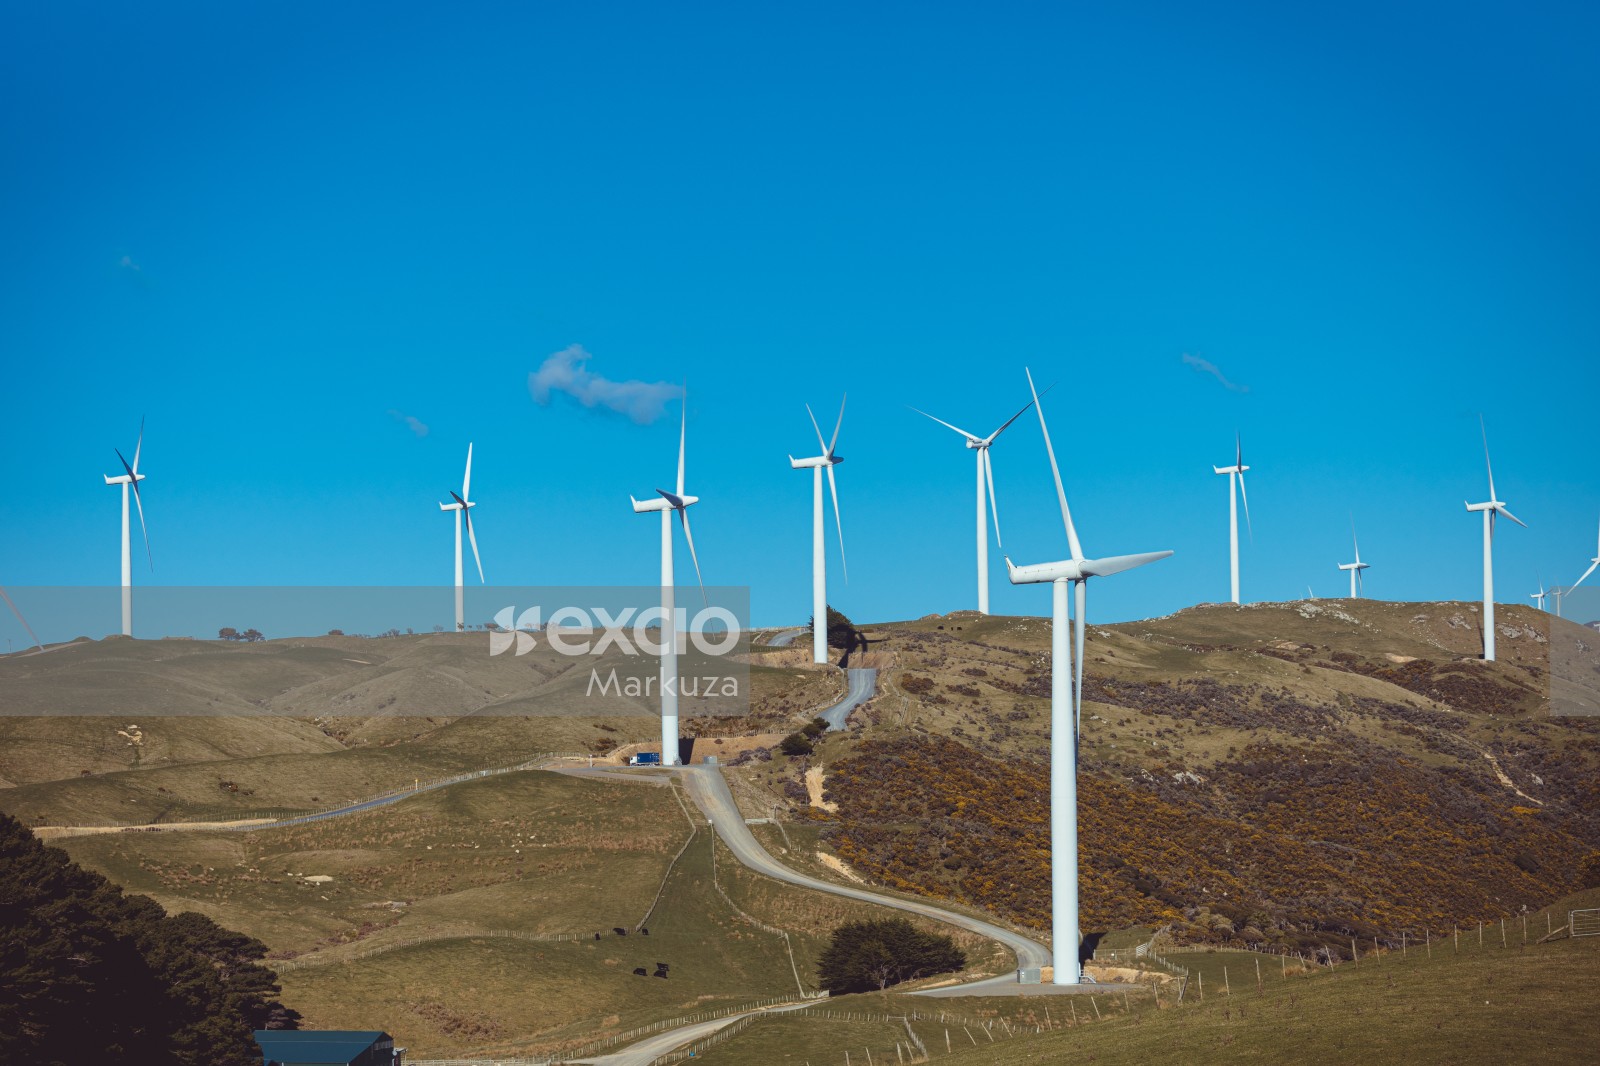 Wellington windy roads through the wind farm